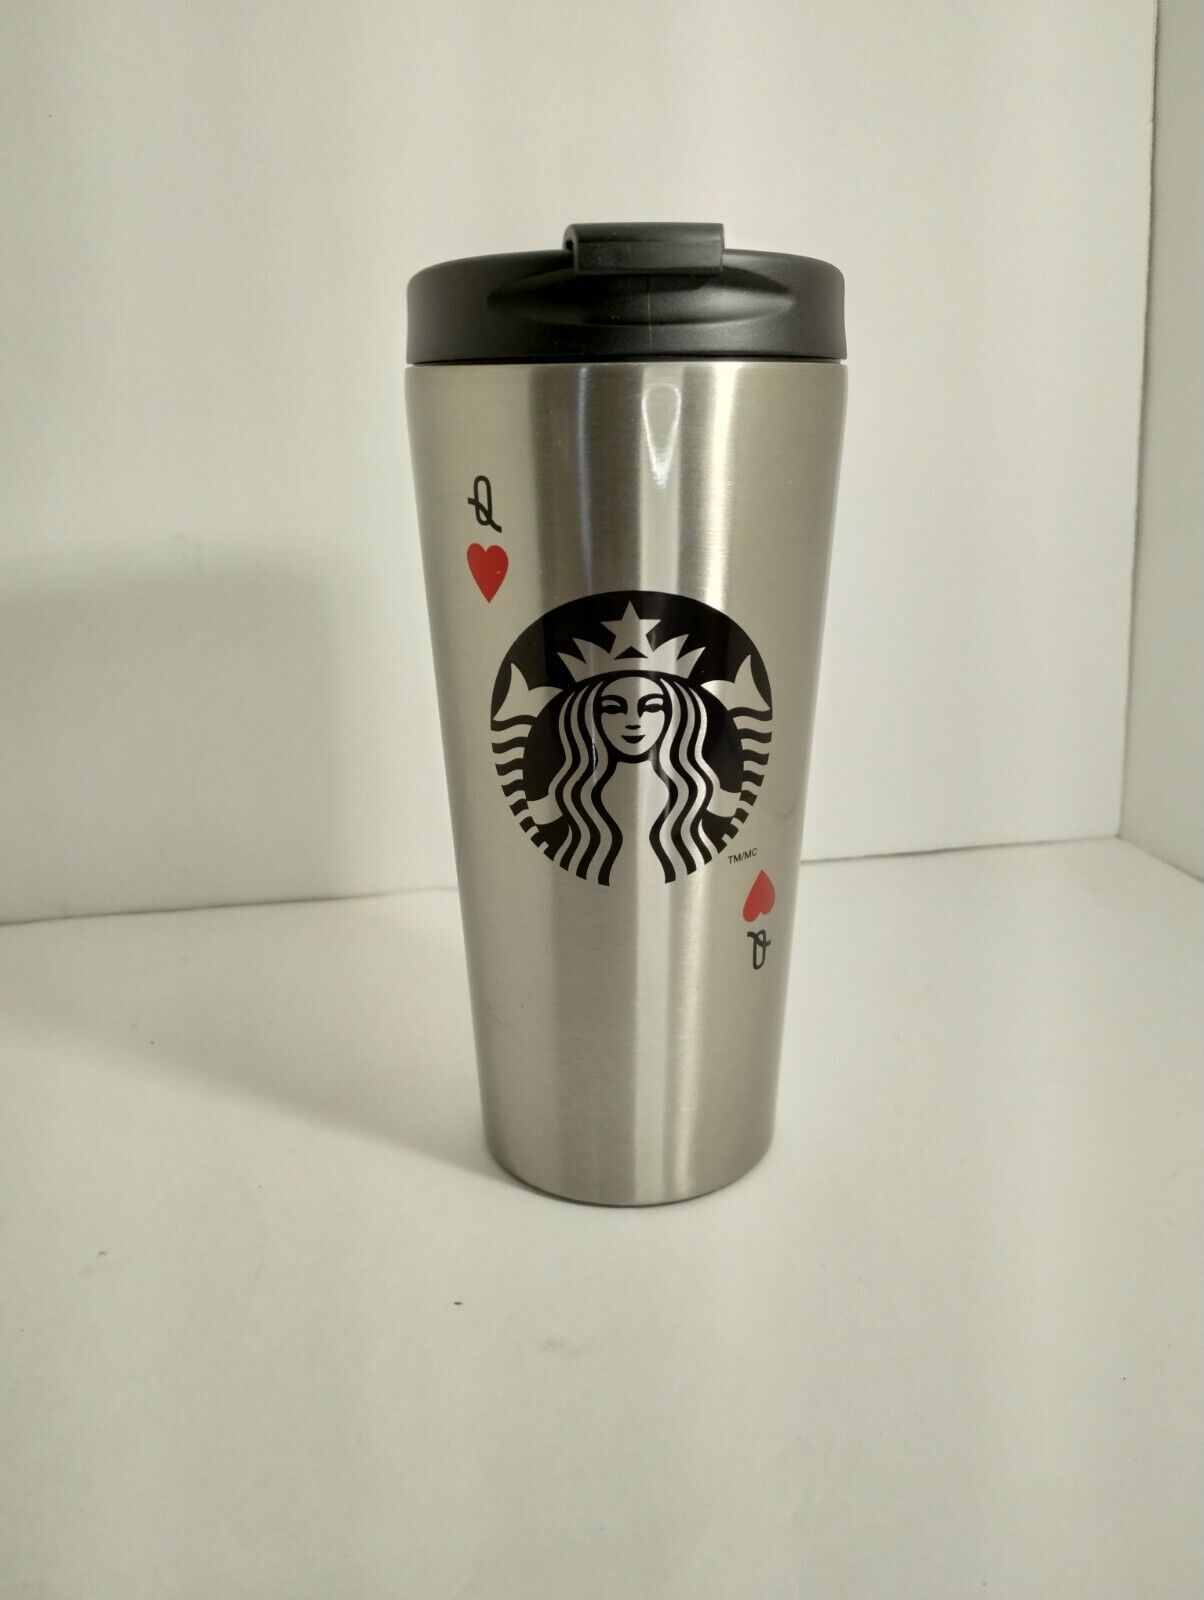 2014 Starbucks Coffee Queen of HEARTS Stainless Steel Travel Mug 16 Oz